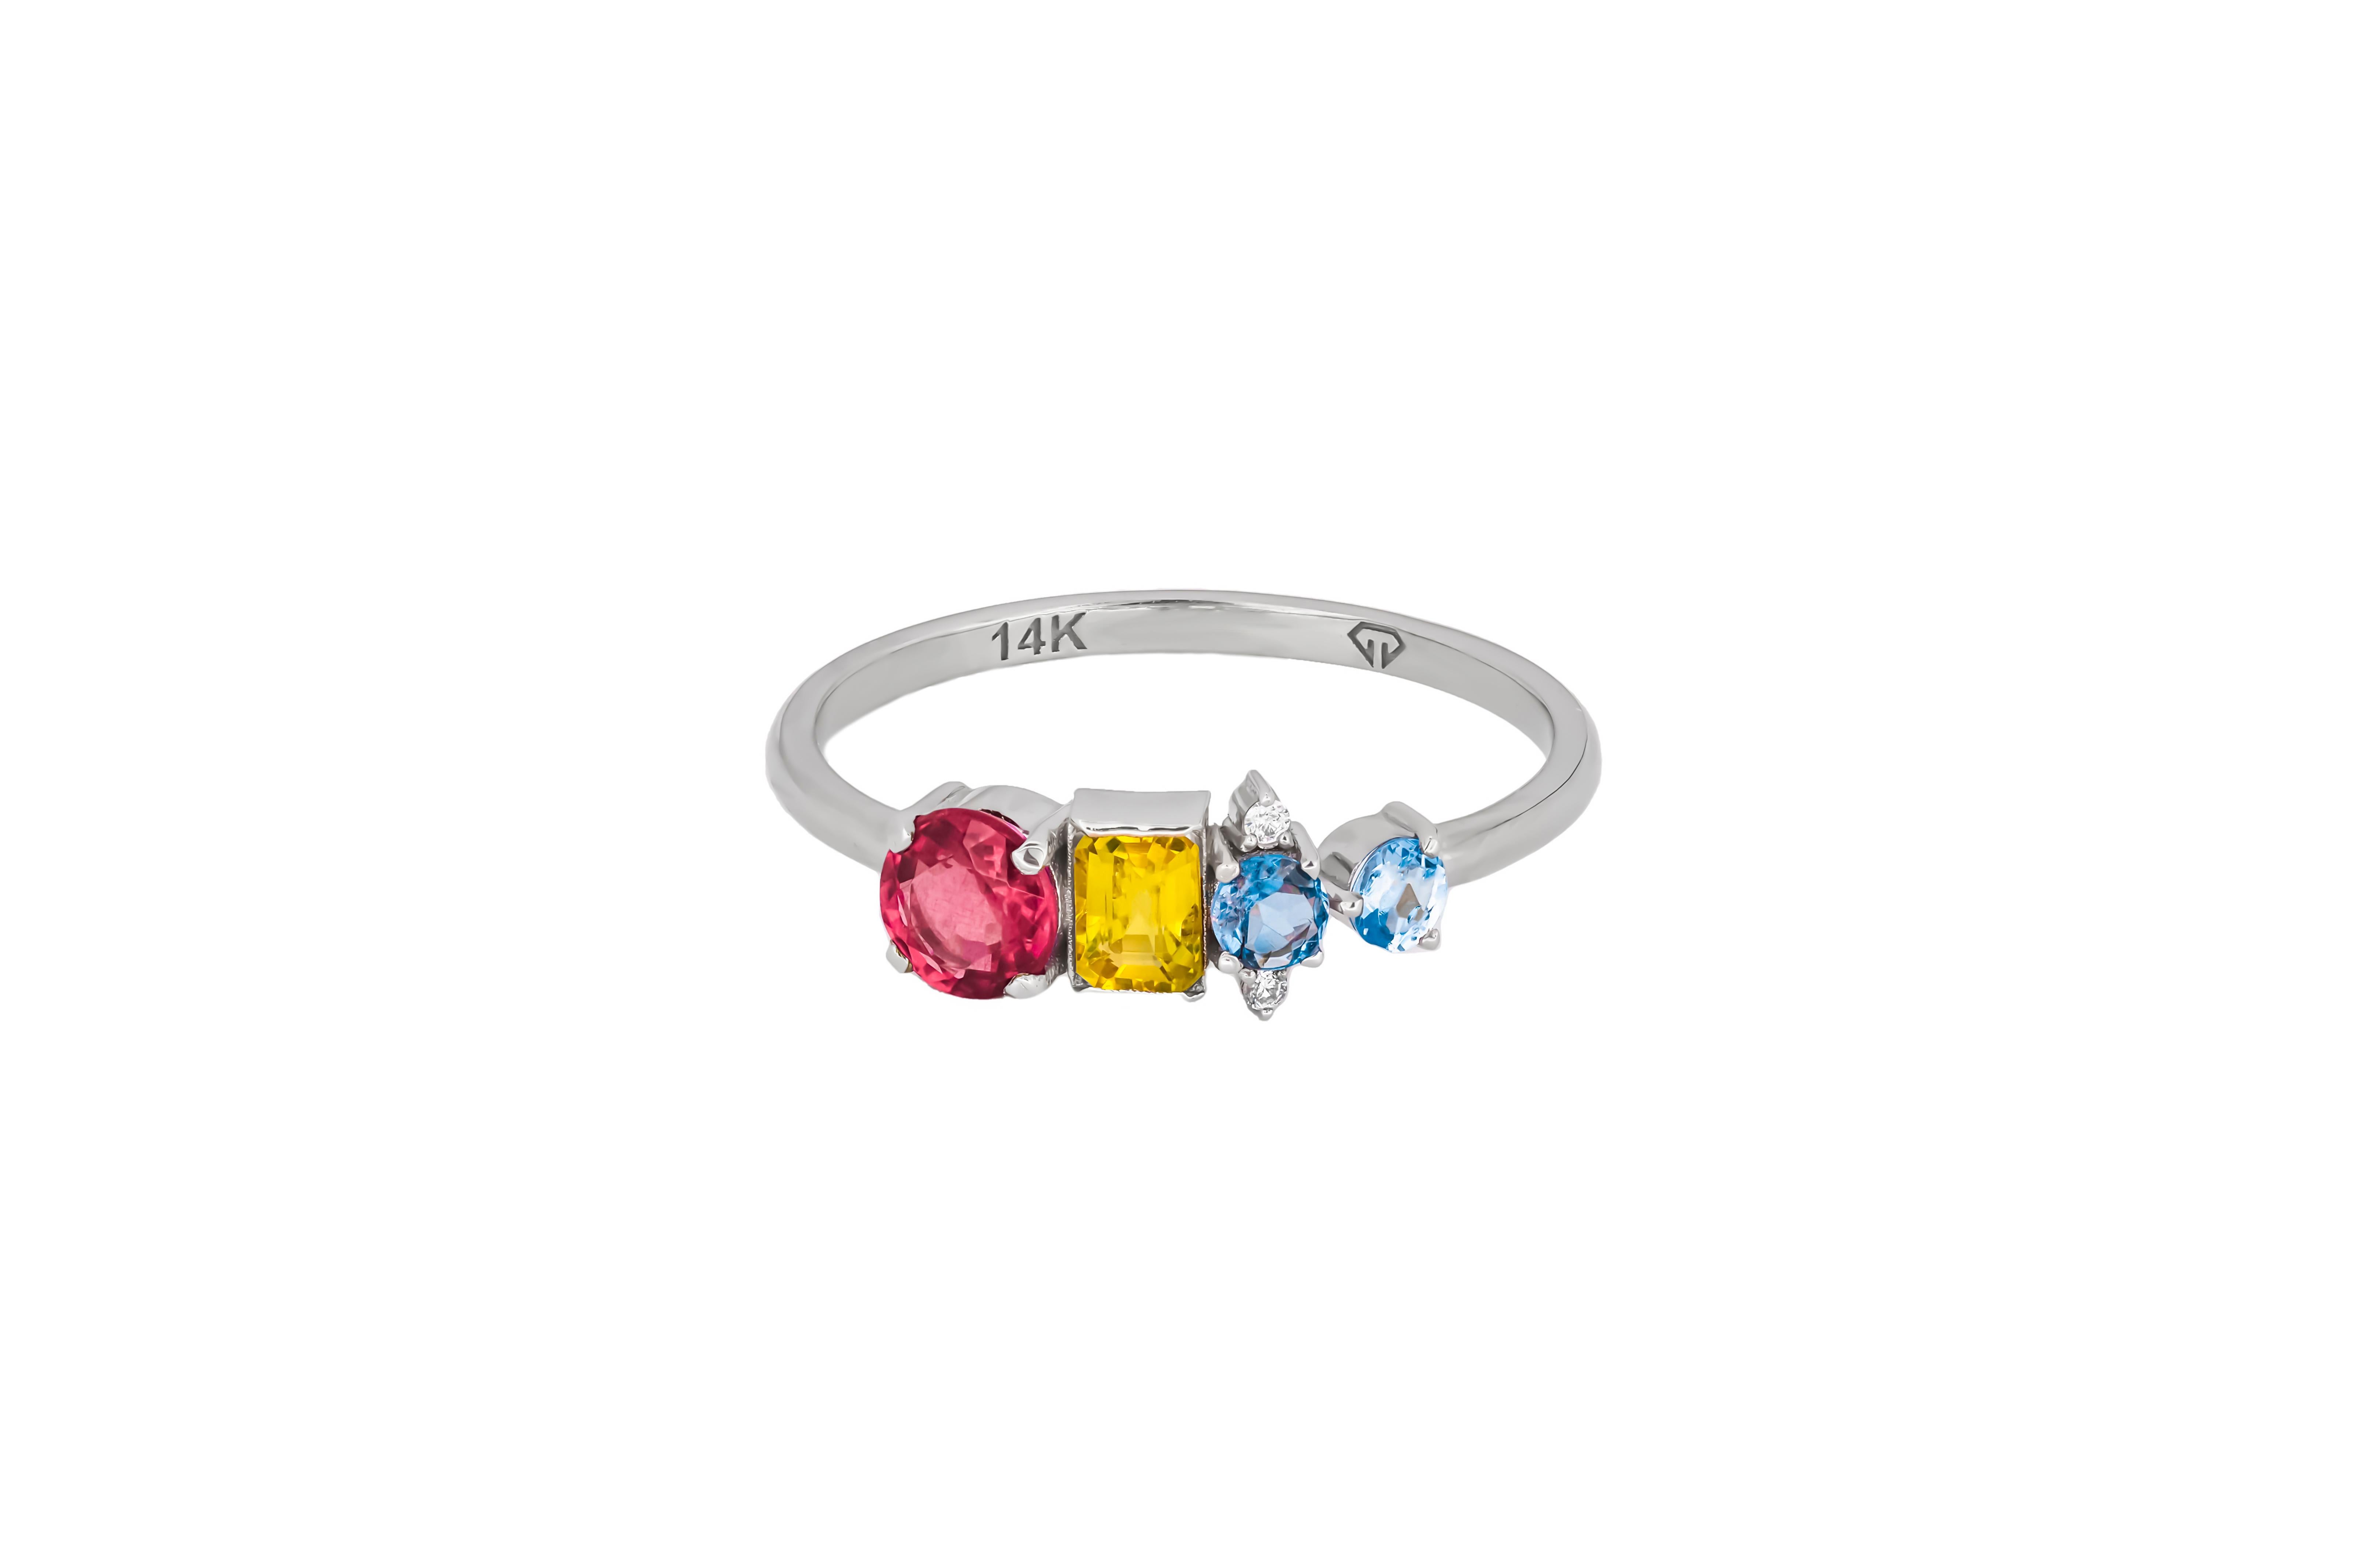 For Sale:  Multicolor gemstone 14k gold ring.  5